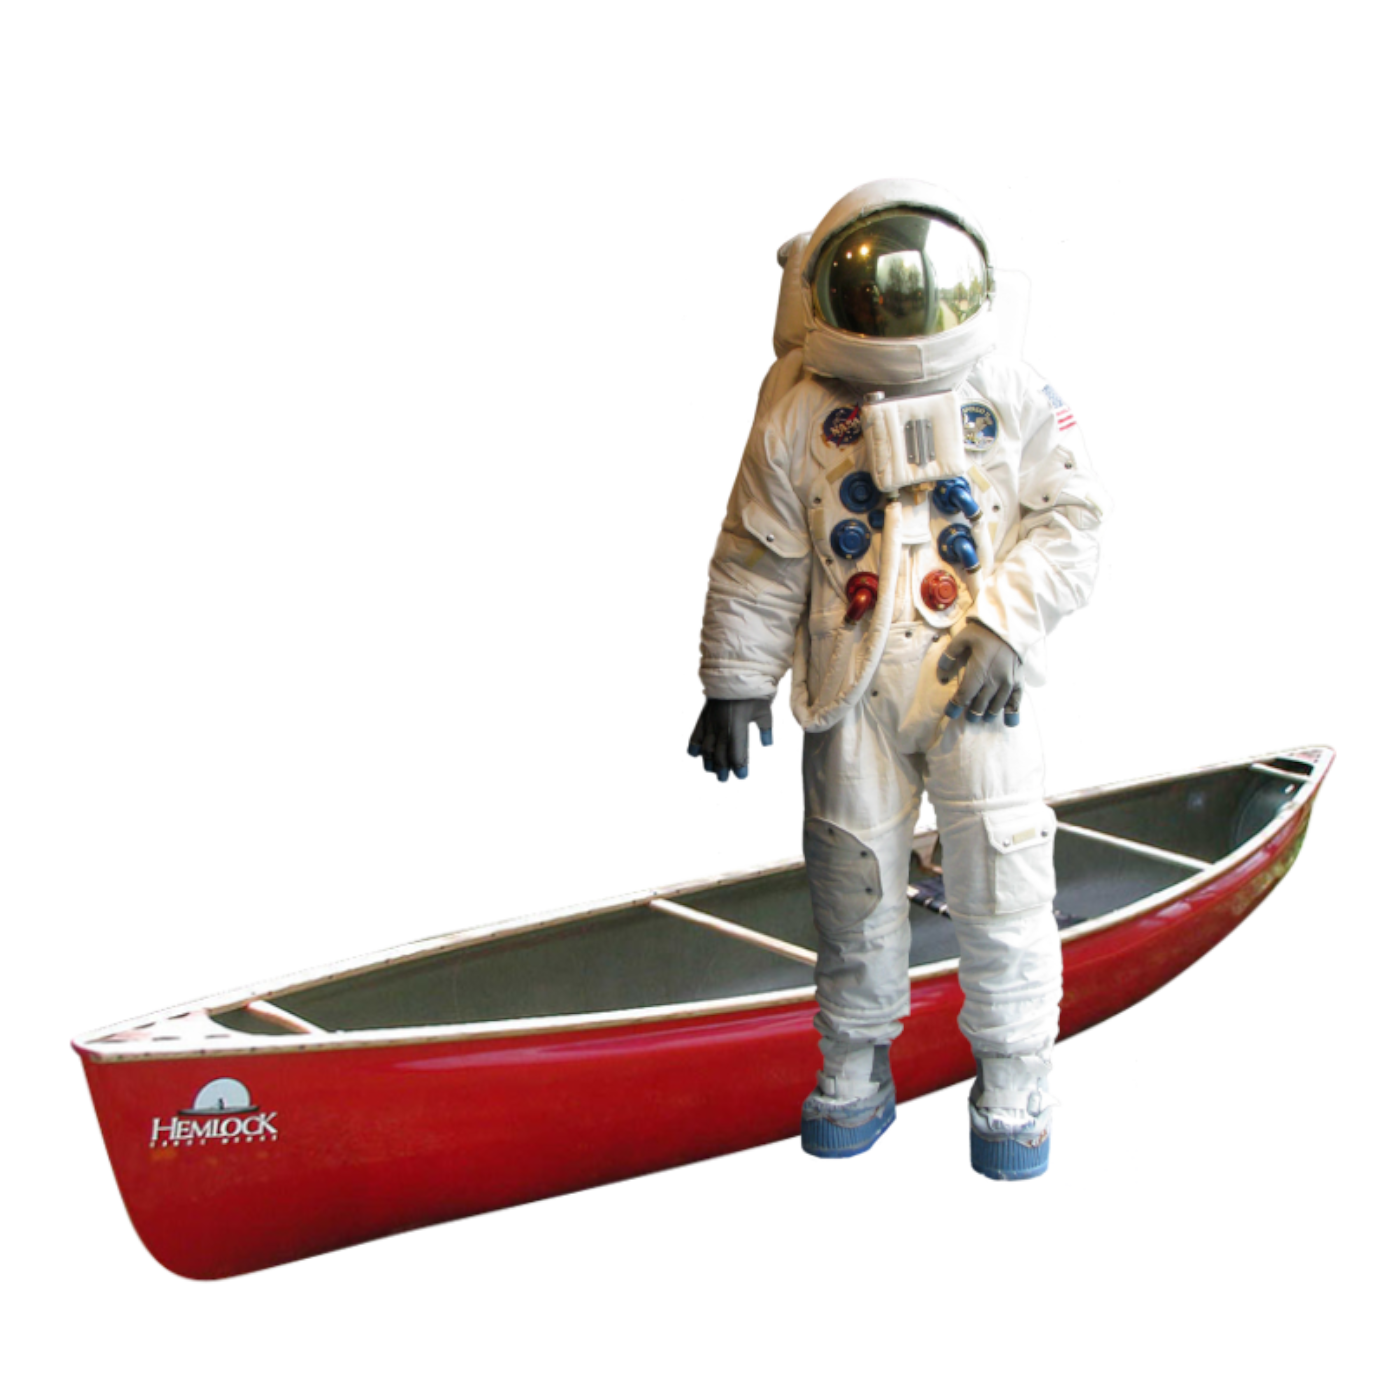 An Astronaut and His Canoe